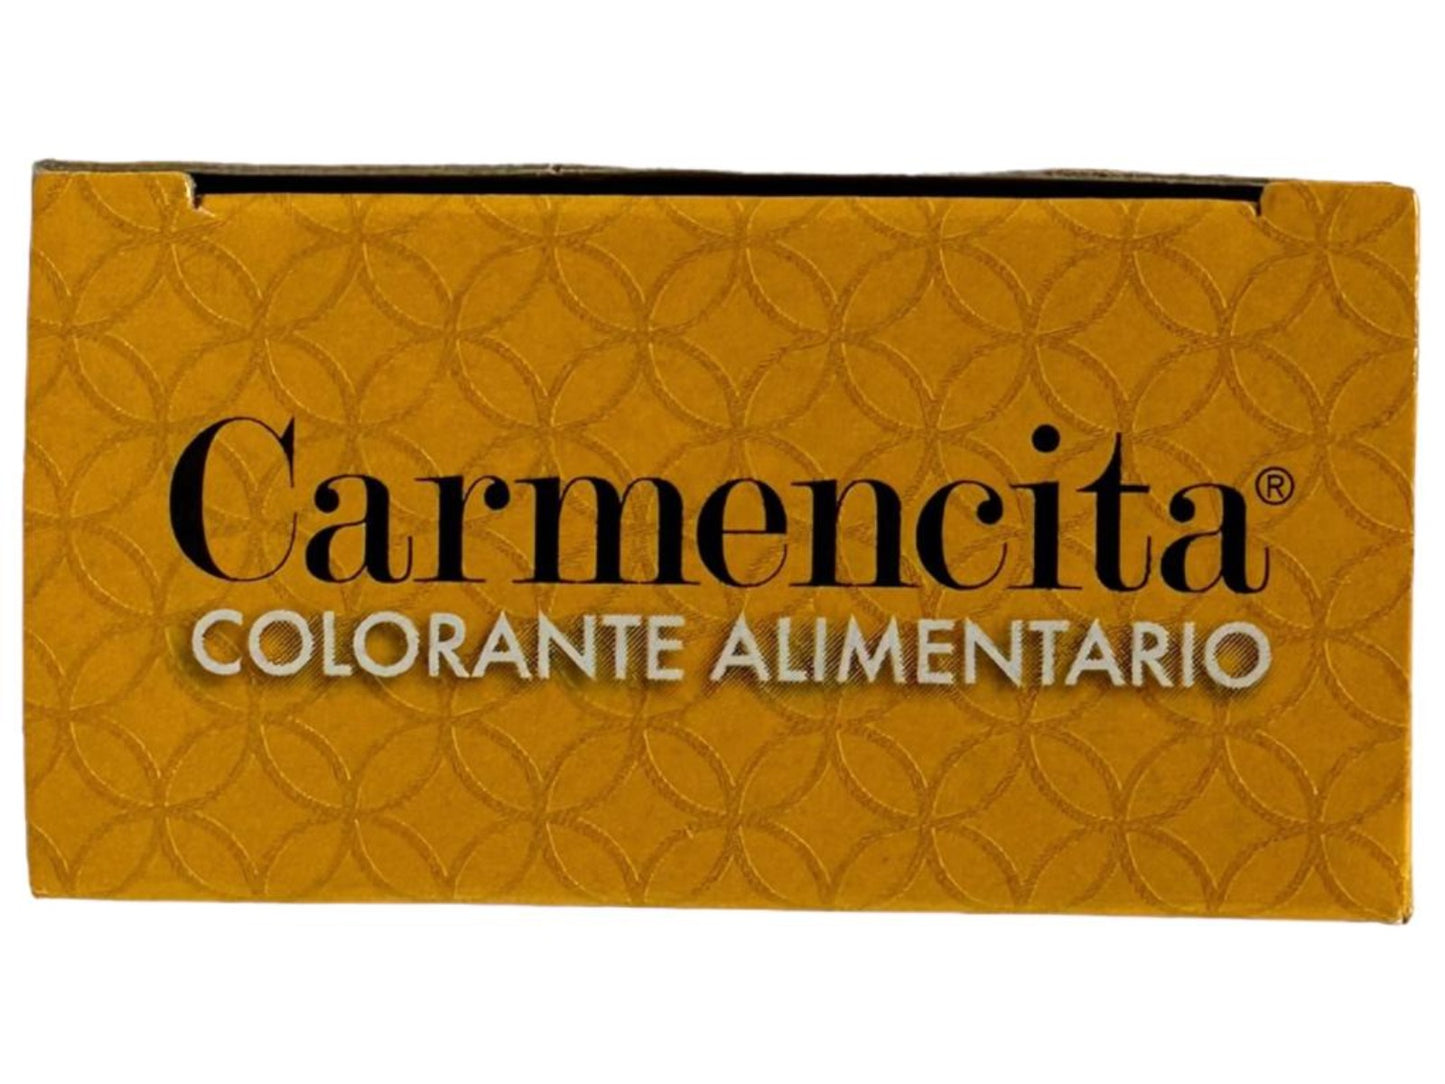 Carmencita Food Colouring 14g